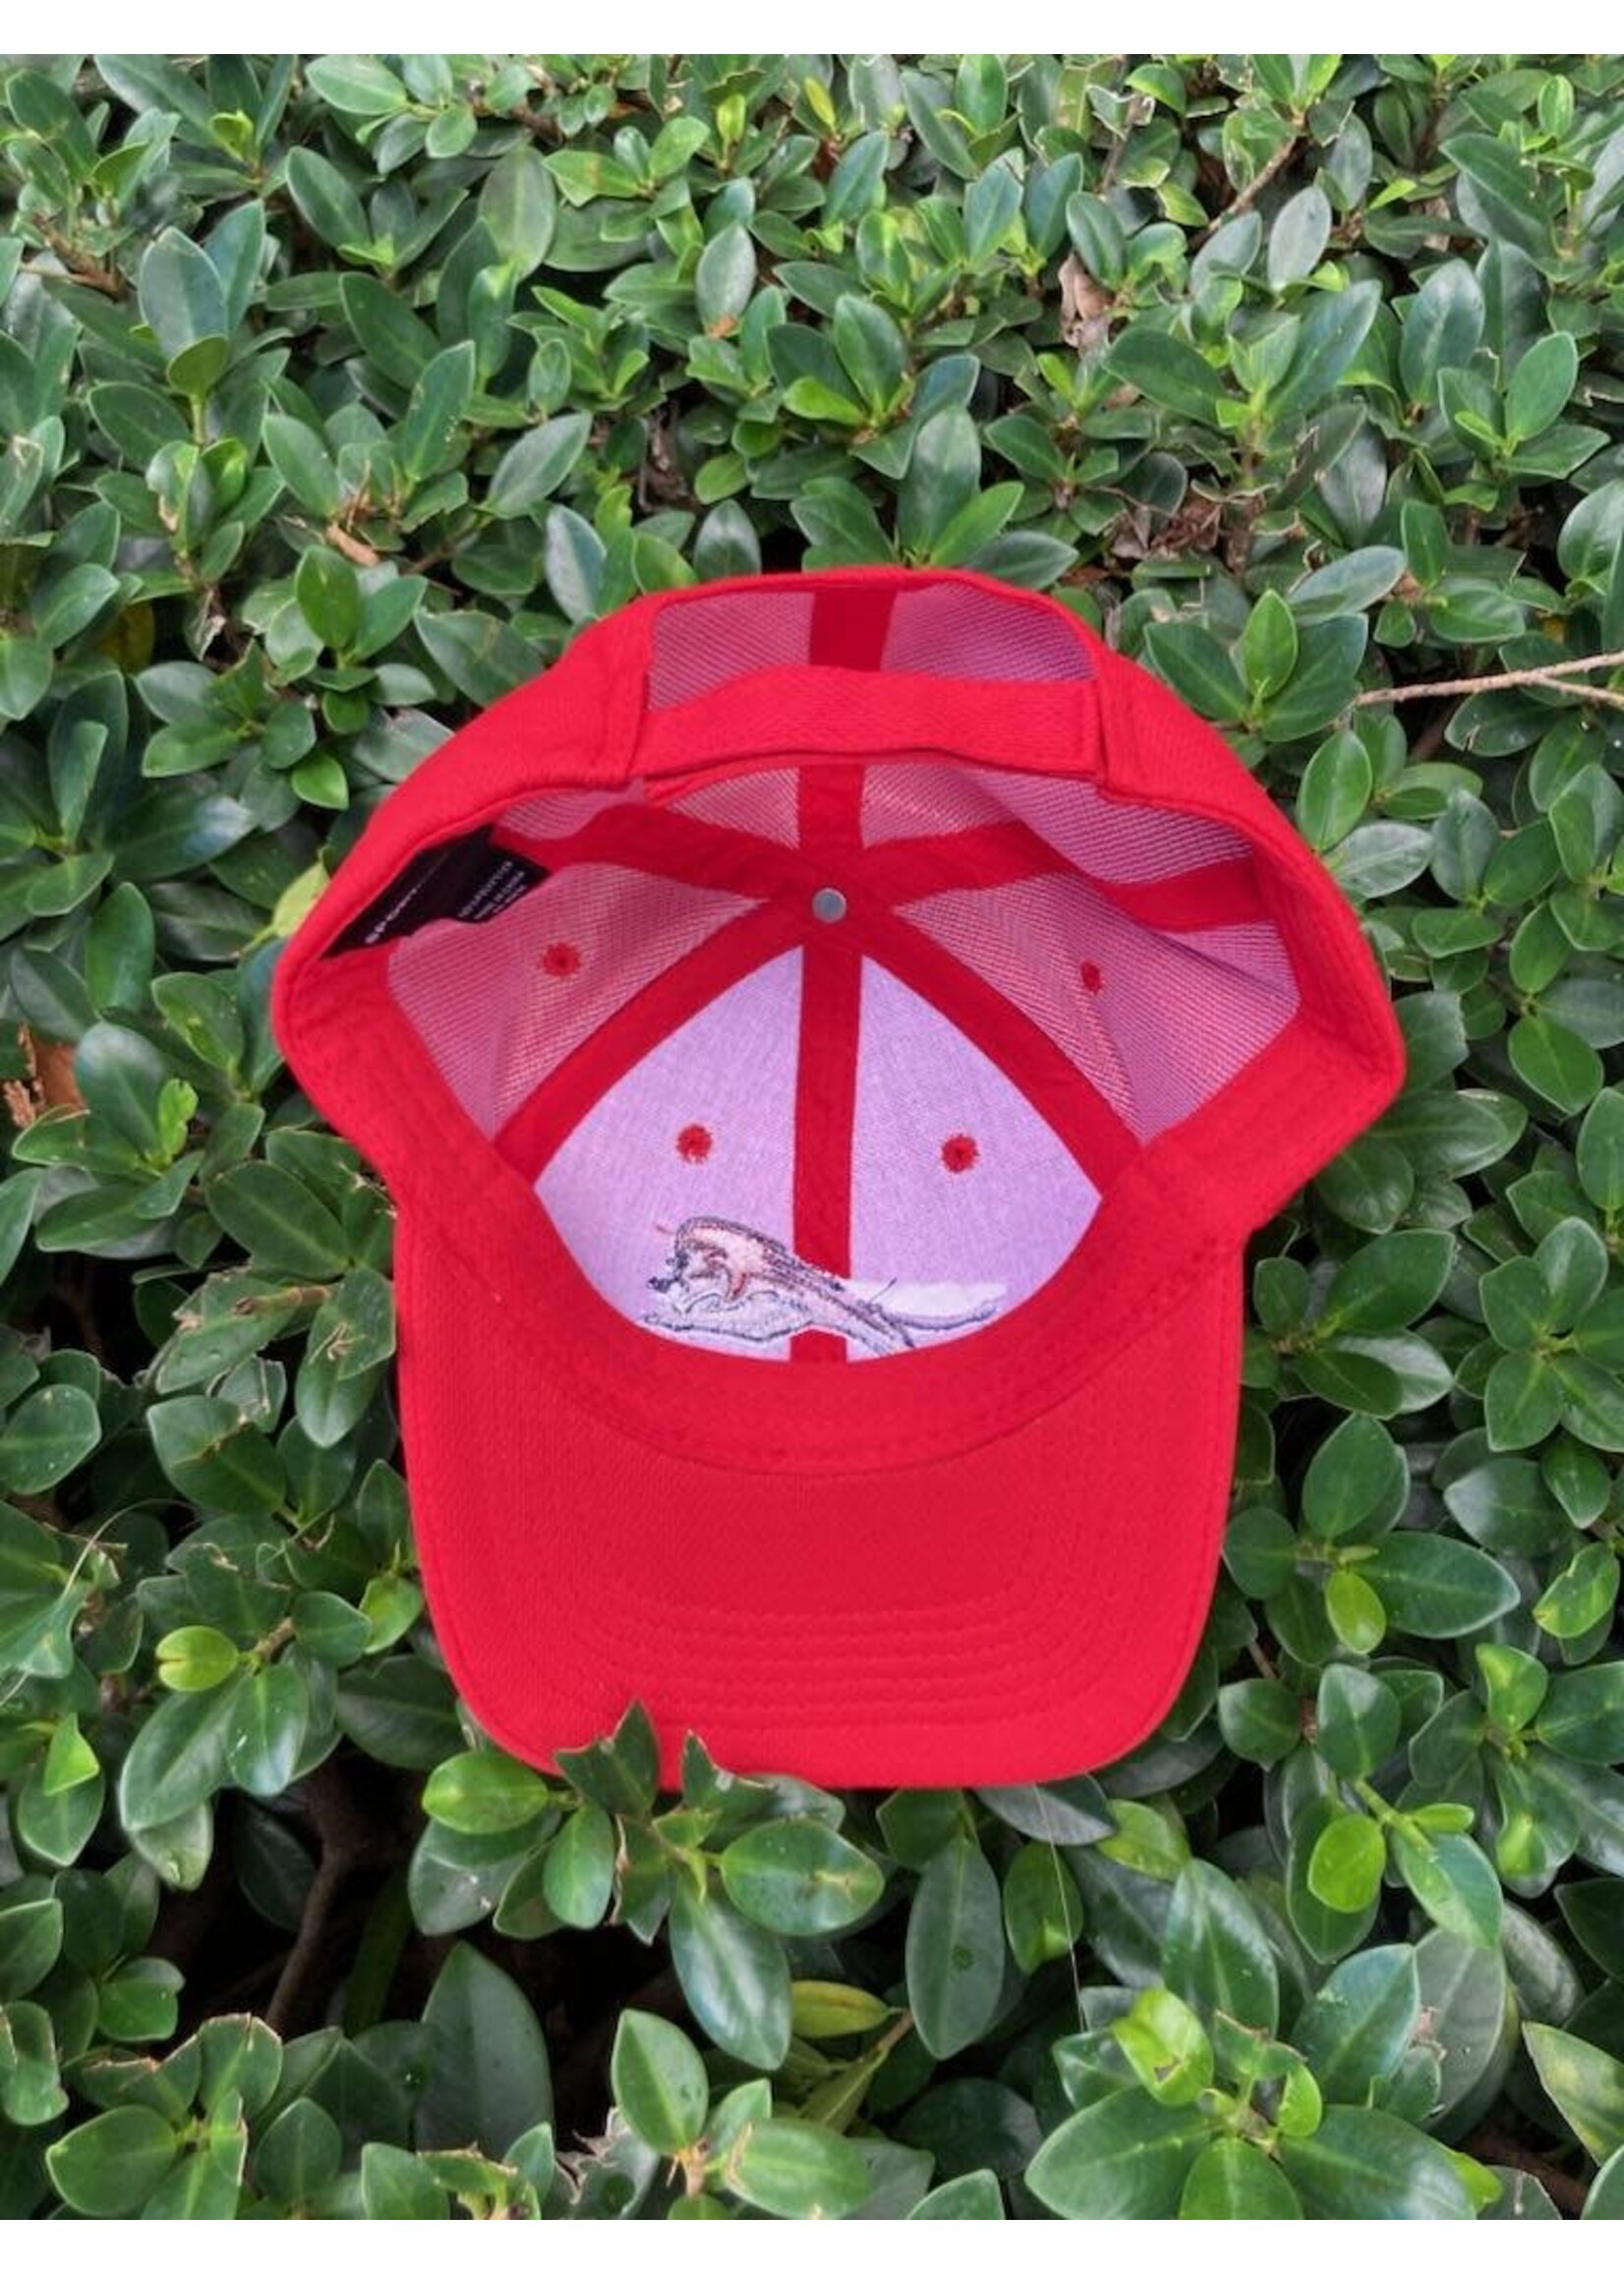 Red-Baseball-Hat